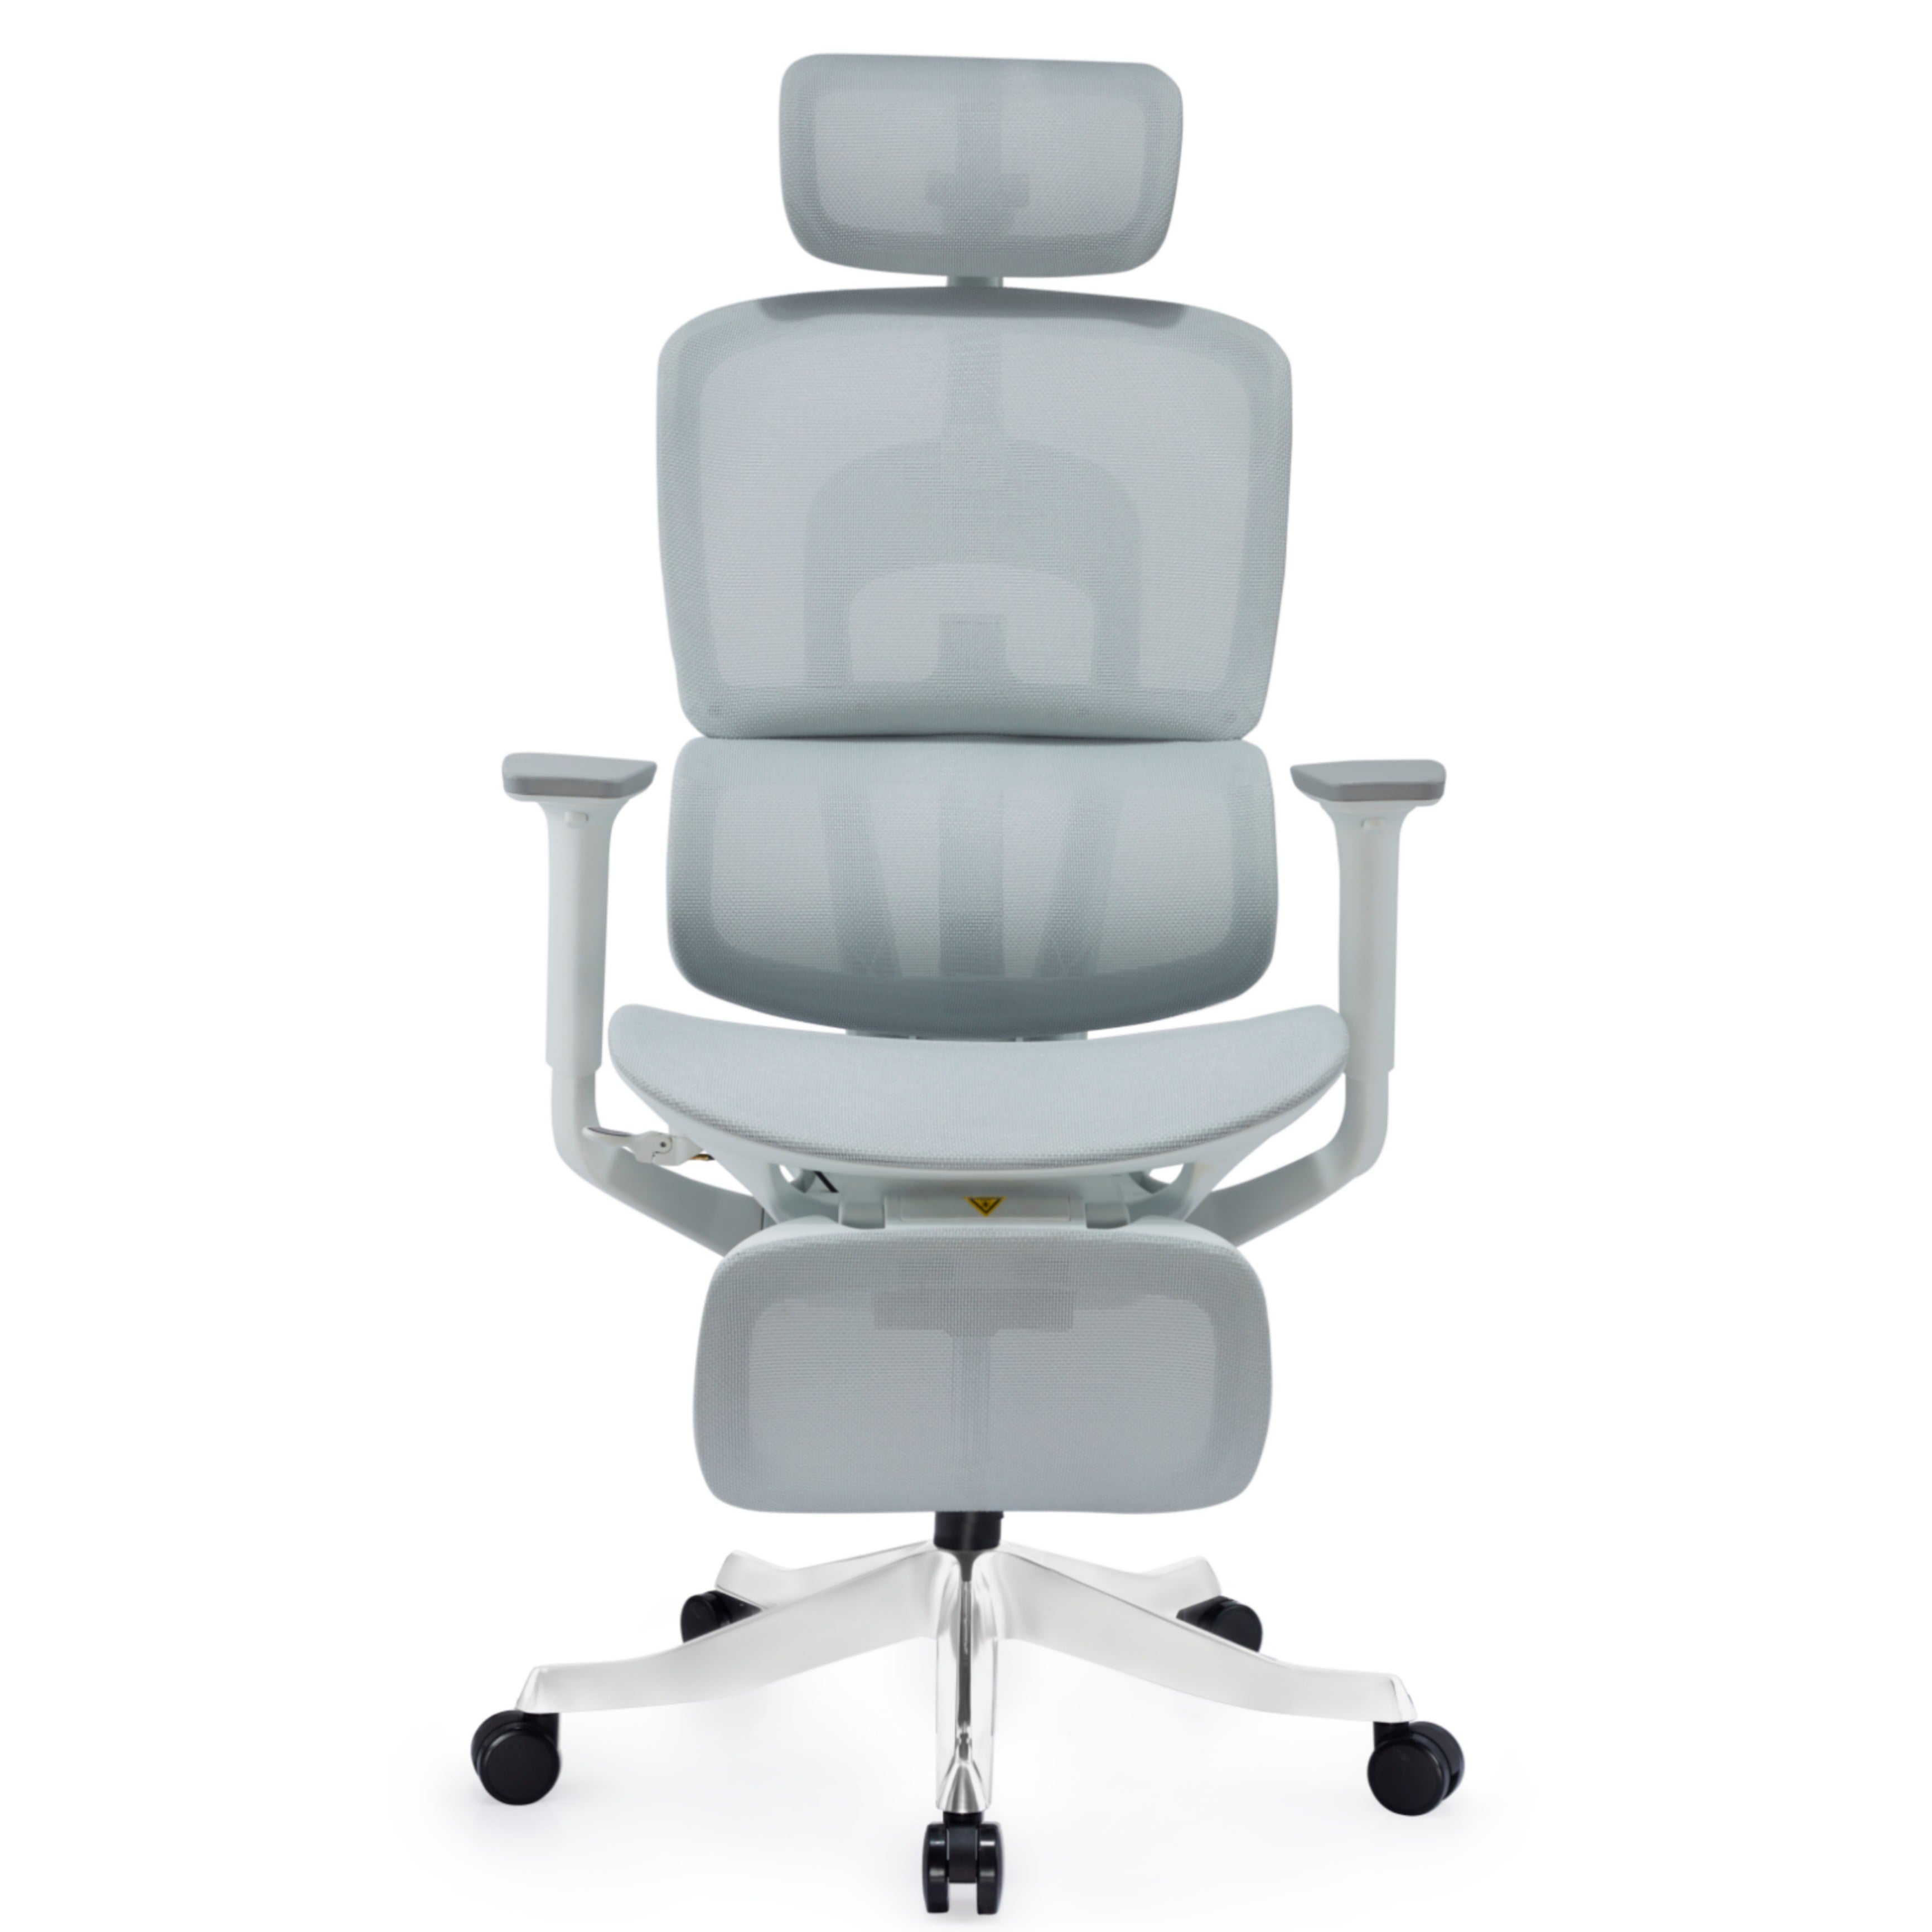 SURI Ergonomic Office Chair Mesh Seat Chair with Self Adjustable